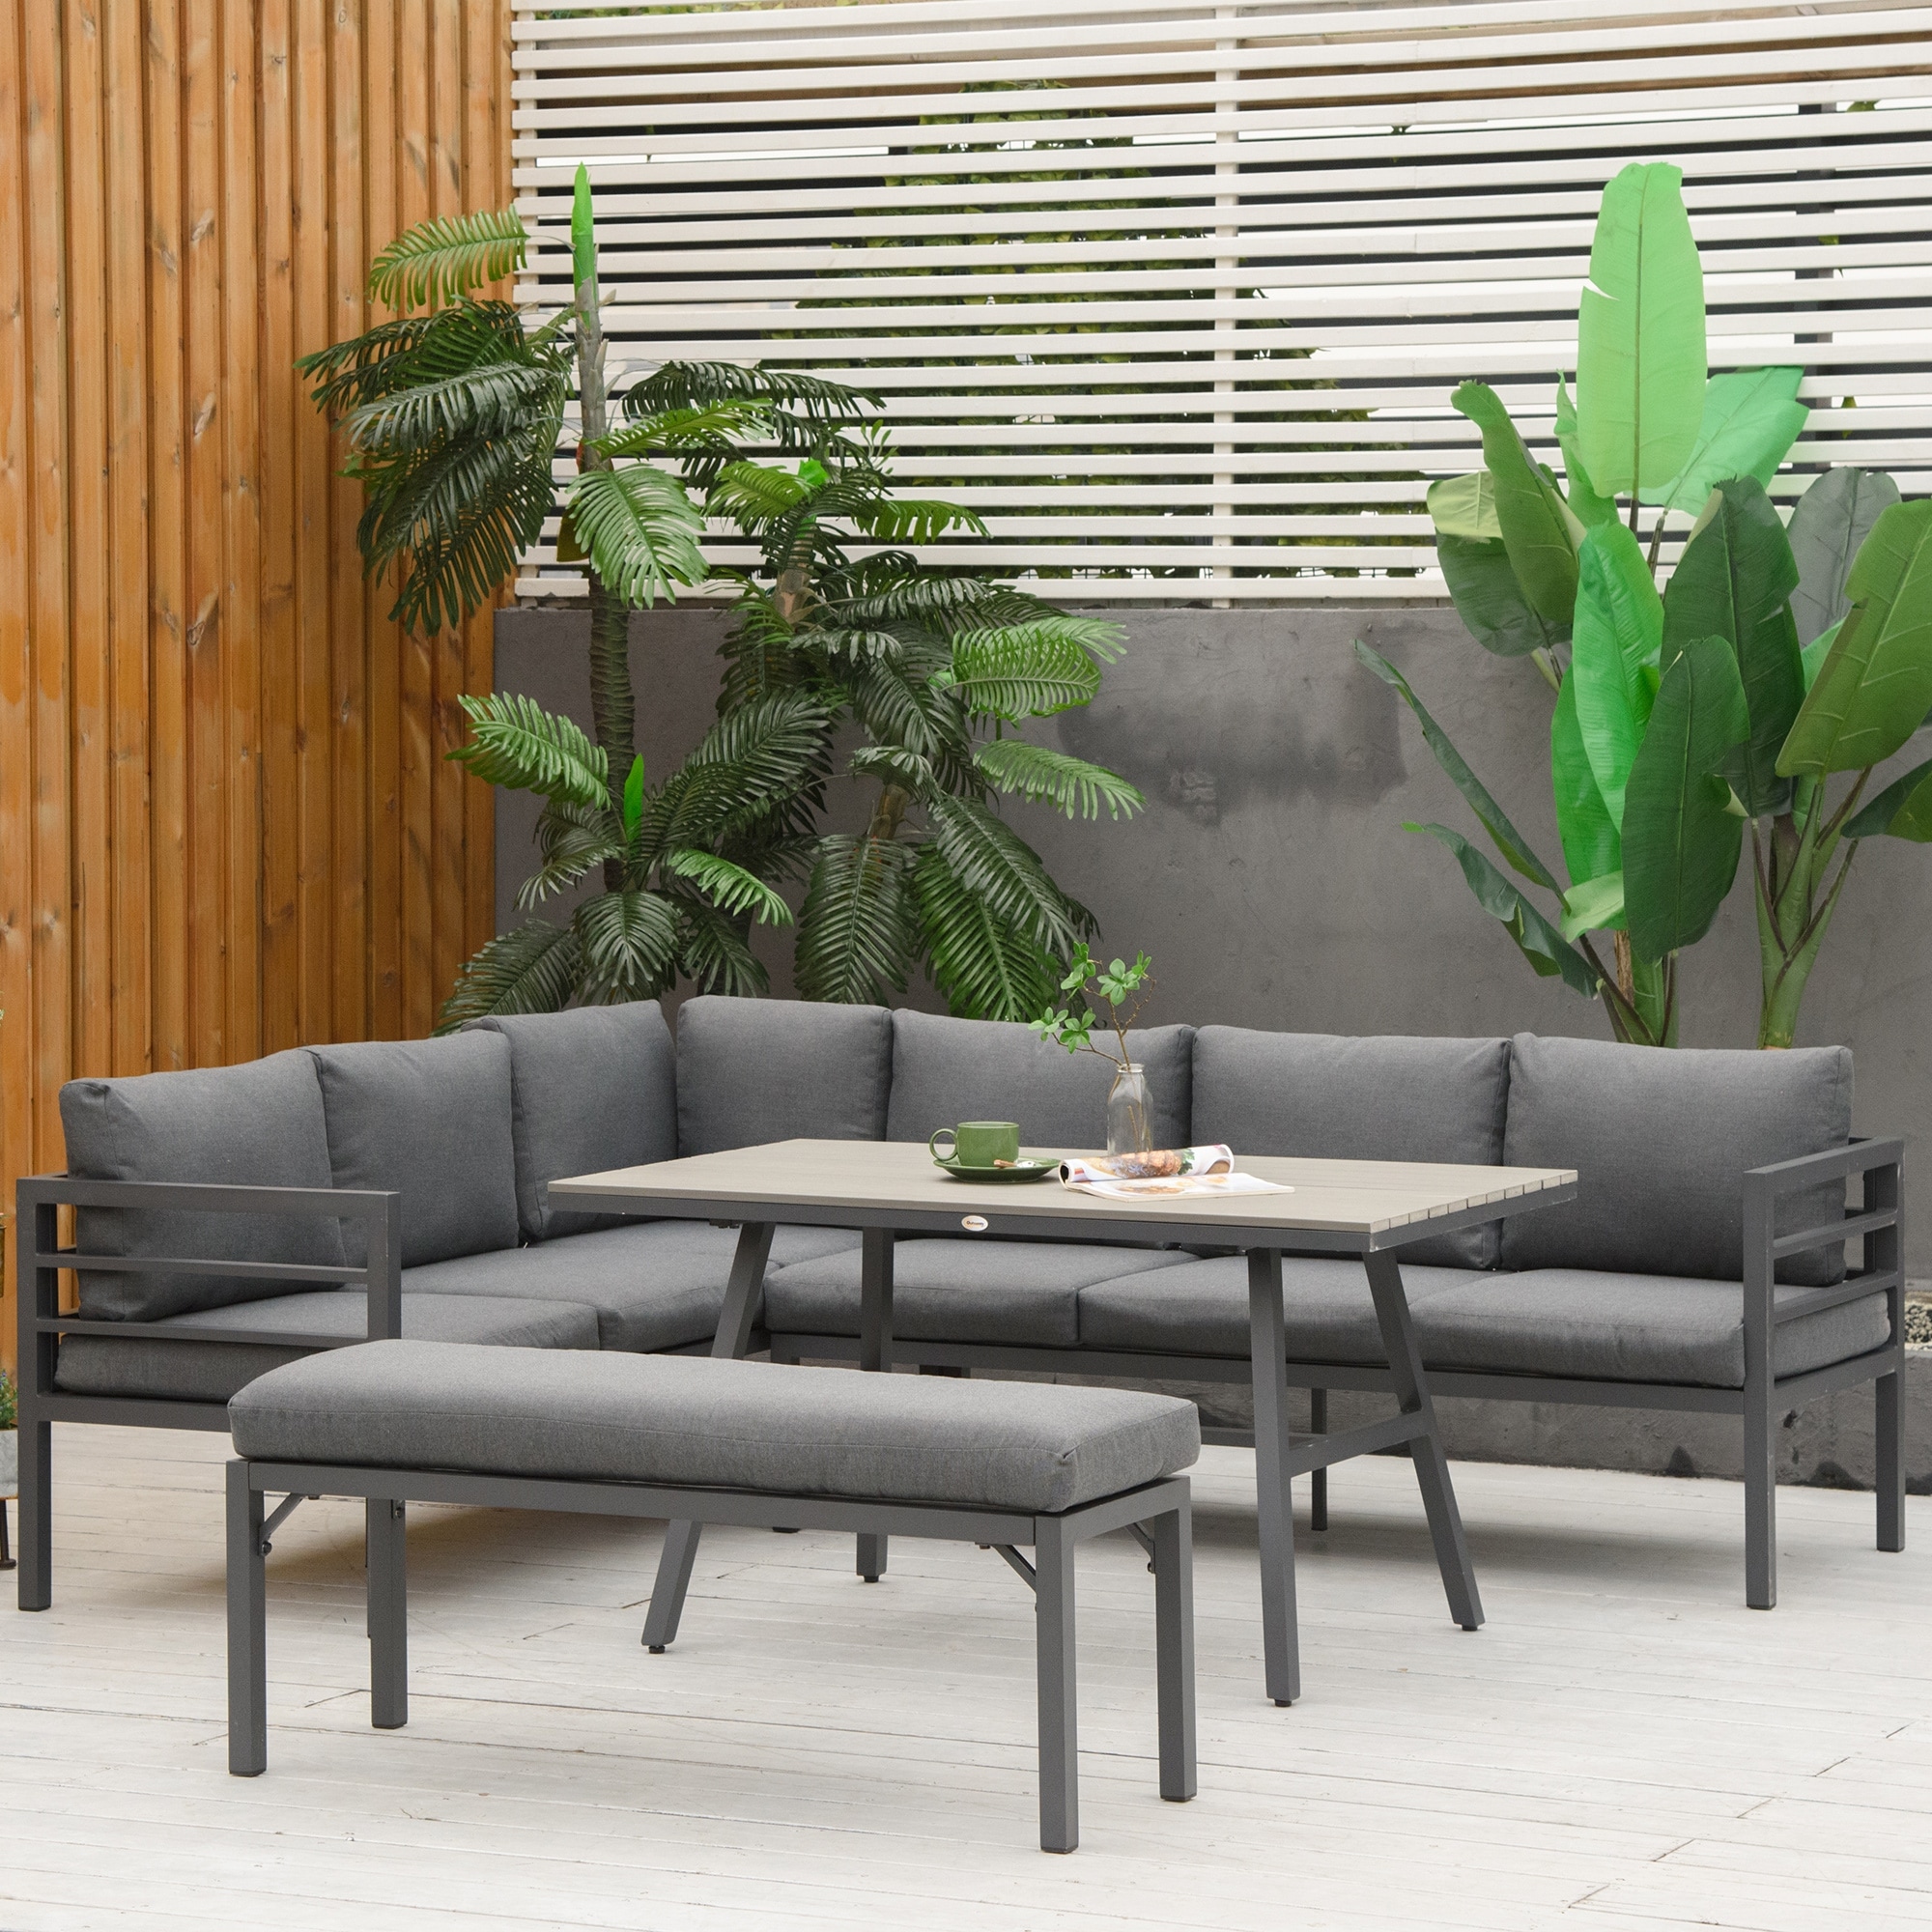 Outsunny 4 Piece Patio Furniture Set Aluminium Outdoor Dining Sofa Set Sectional Conversation Set W/ Bench